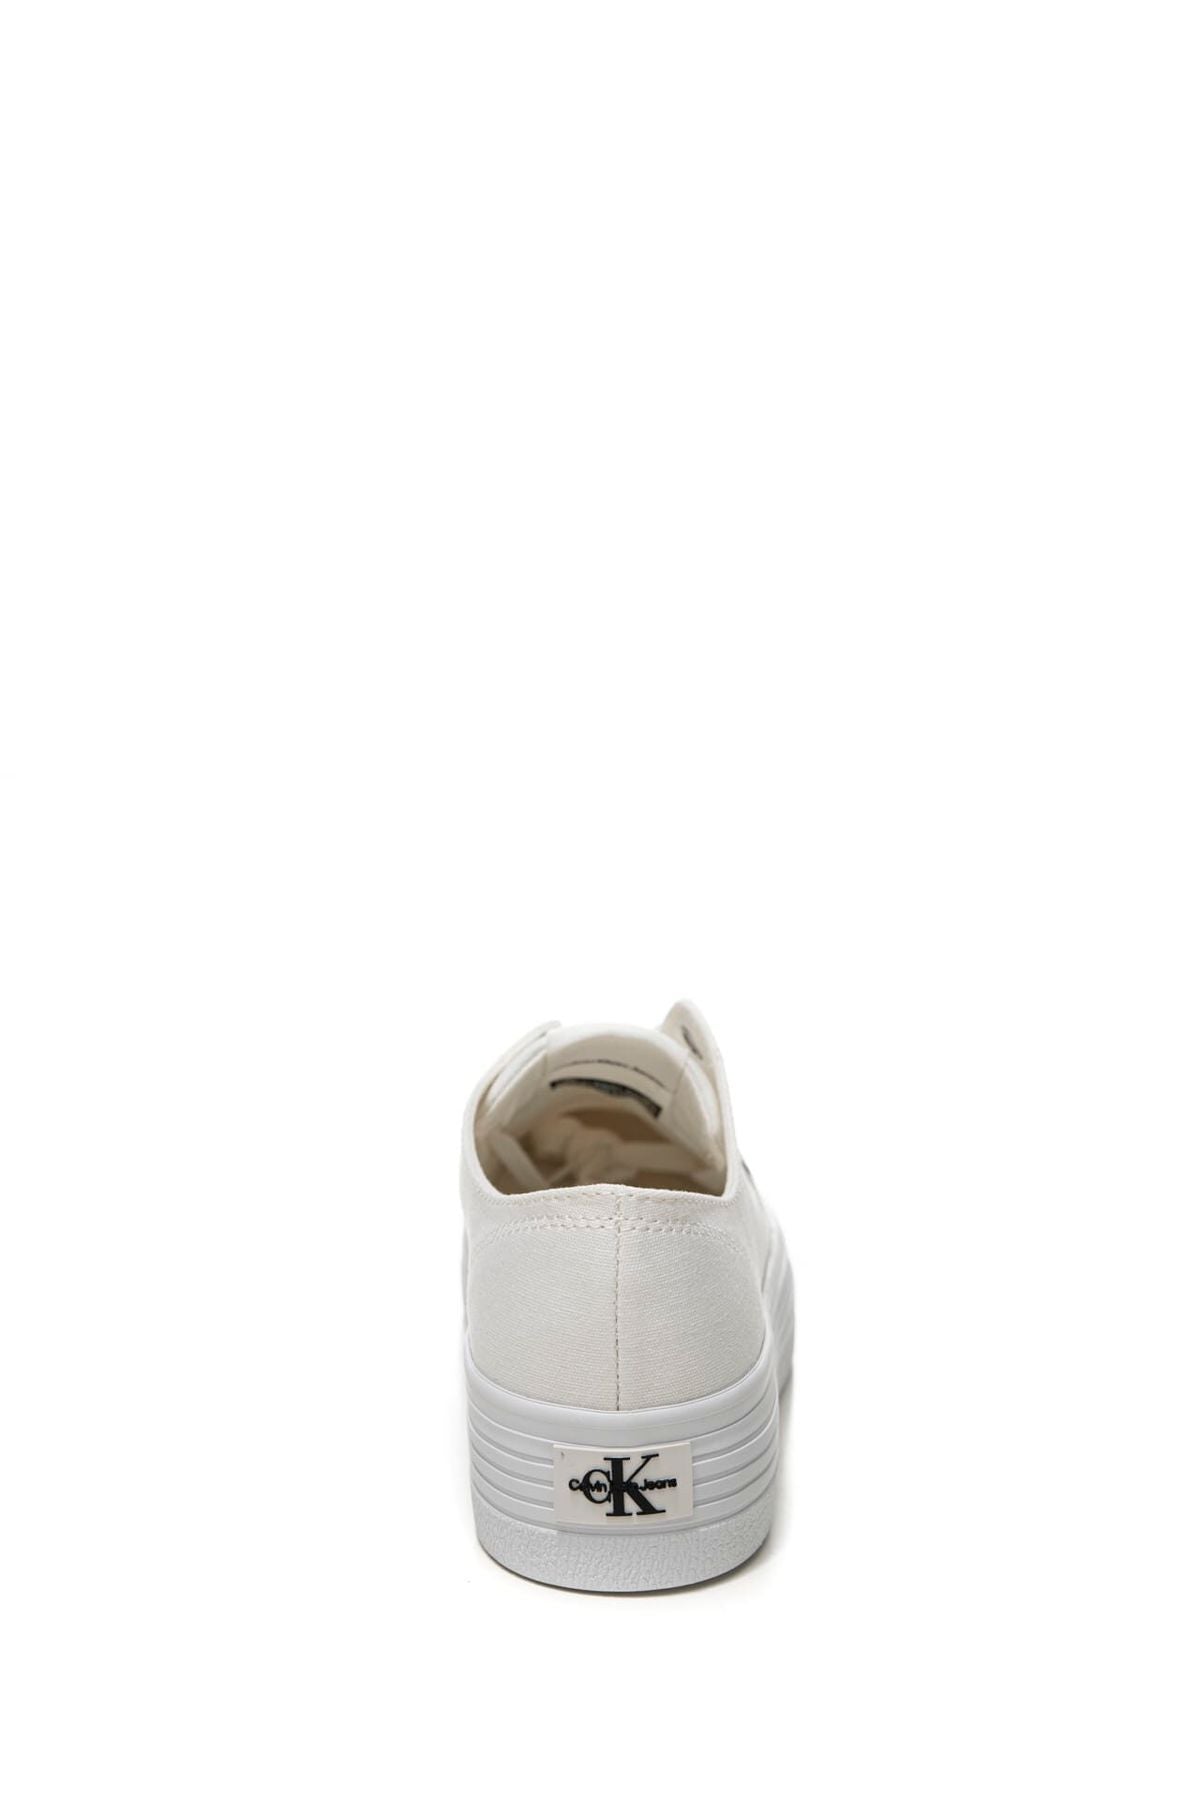 Sneakers Calvin Klein Donna Vulc Flatform Bianco